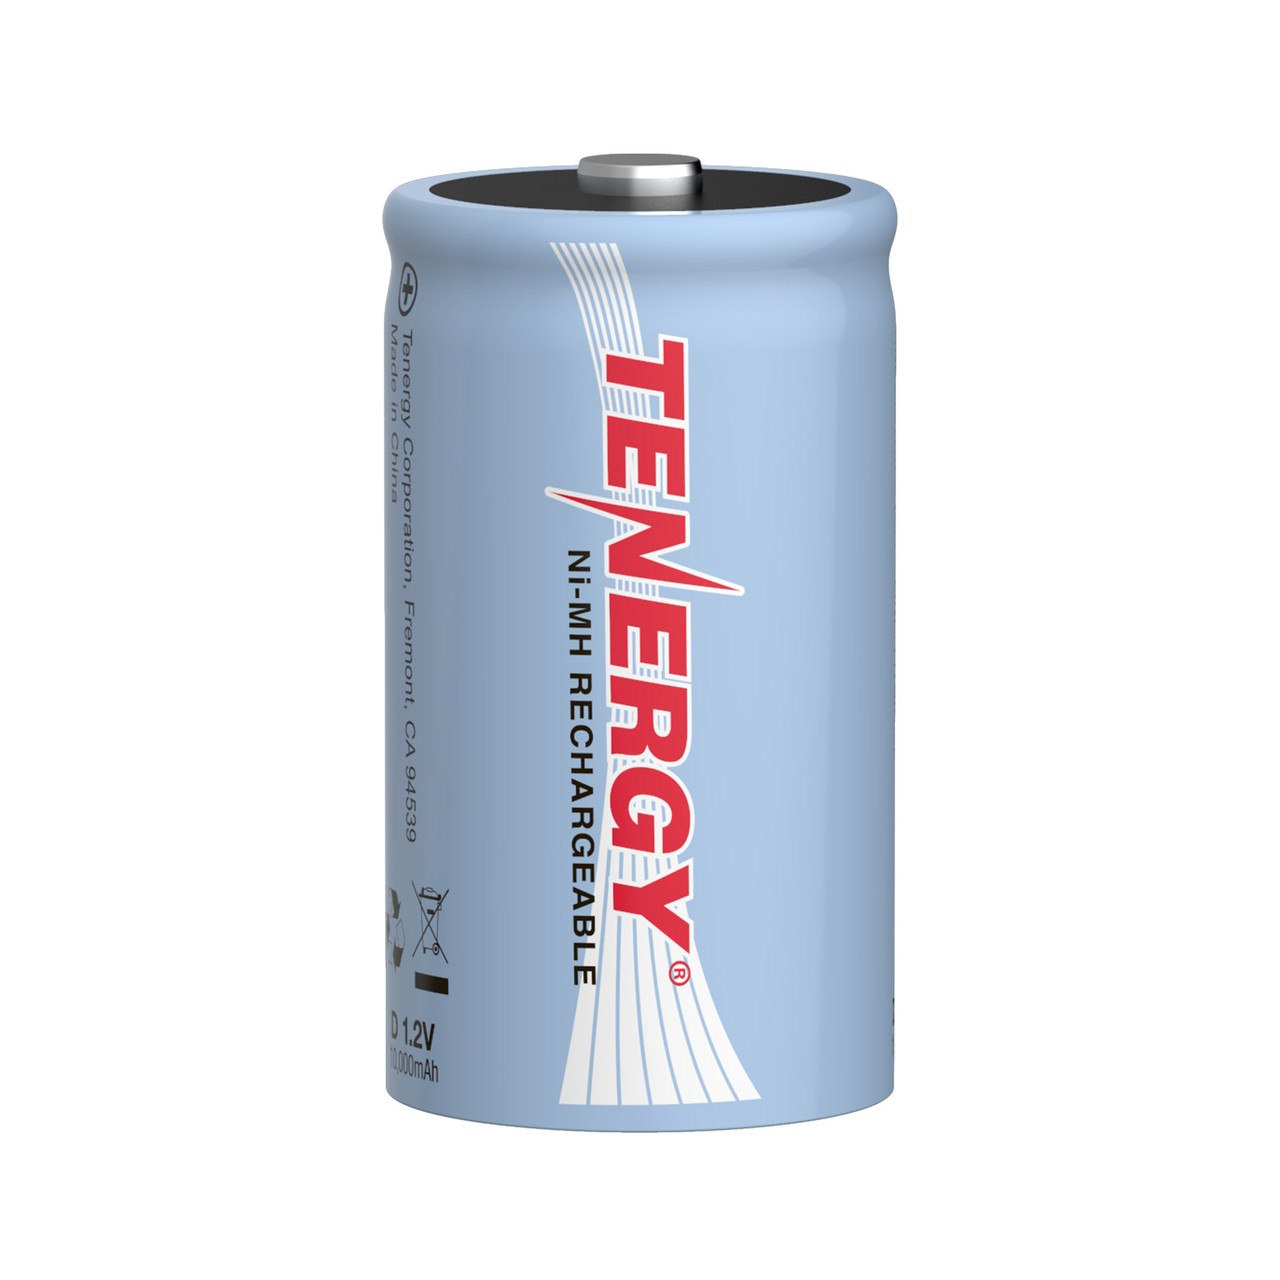 Tenergy D 10,000mAh NiMH Rechargeable Battery